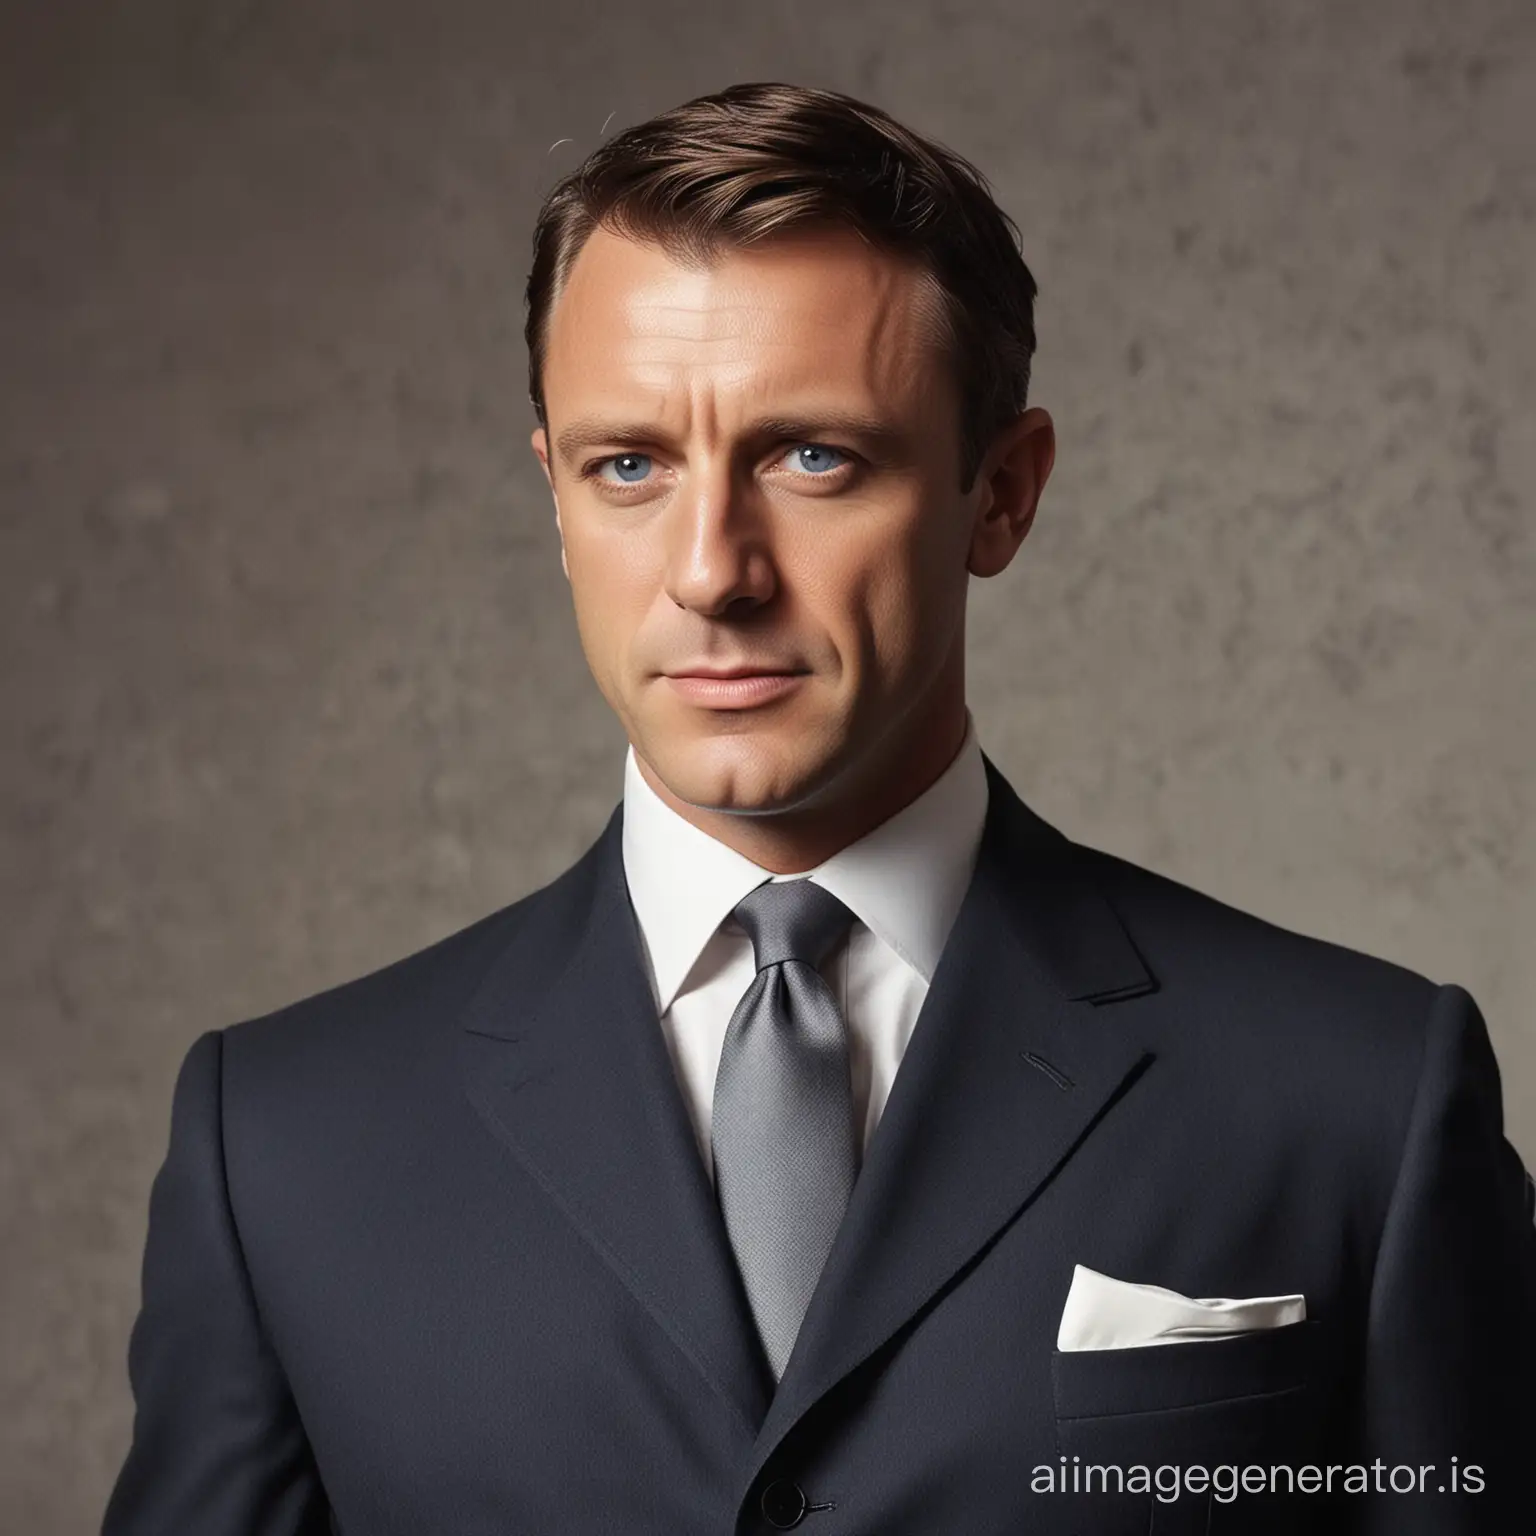 Sophisticated-Secret-Agent-James-Bonds-Cool-and-Confident-Persona